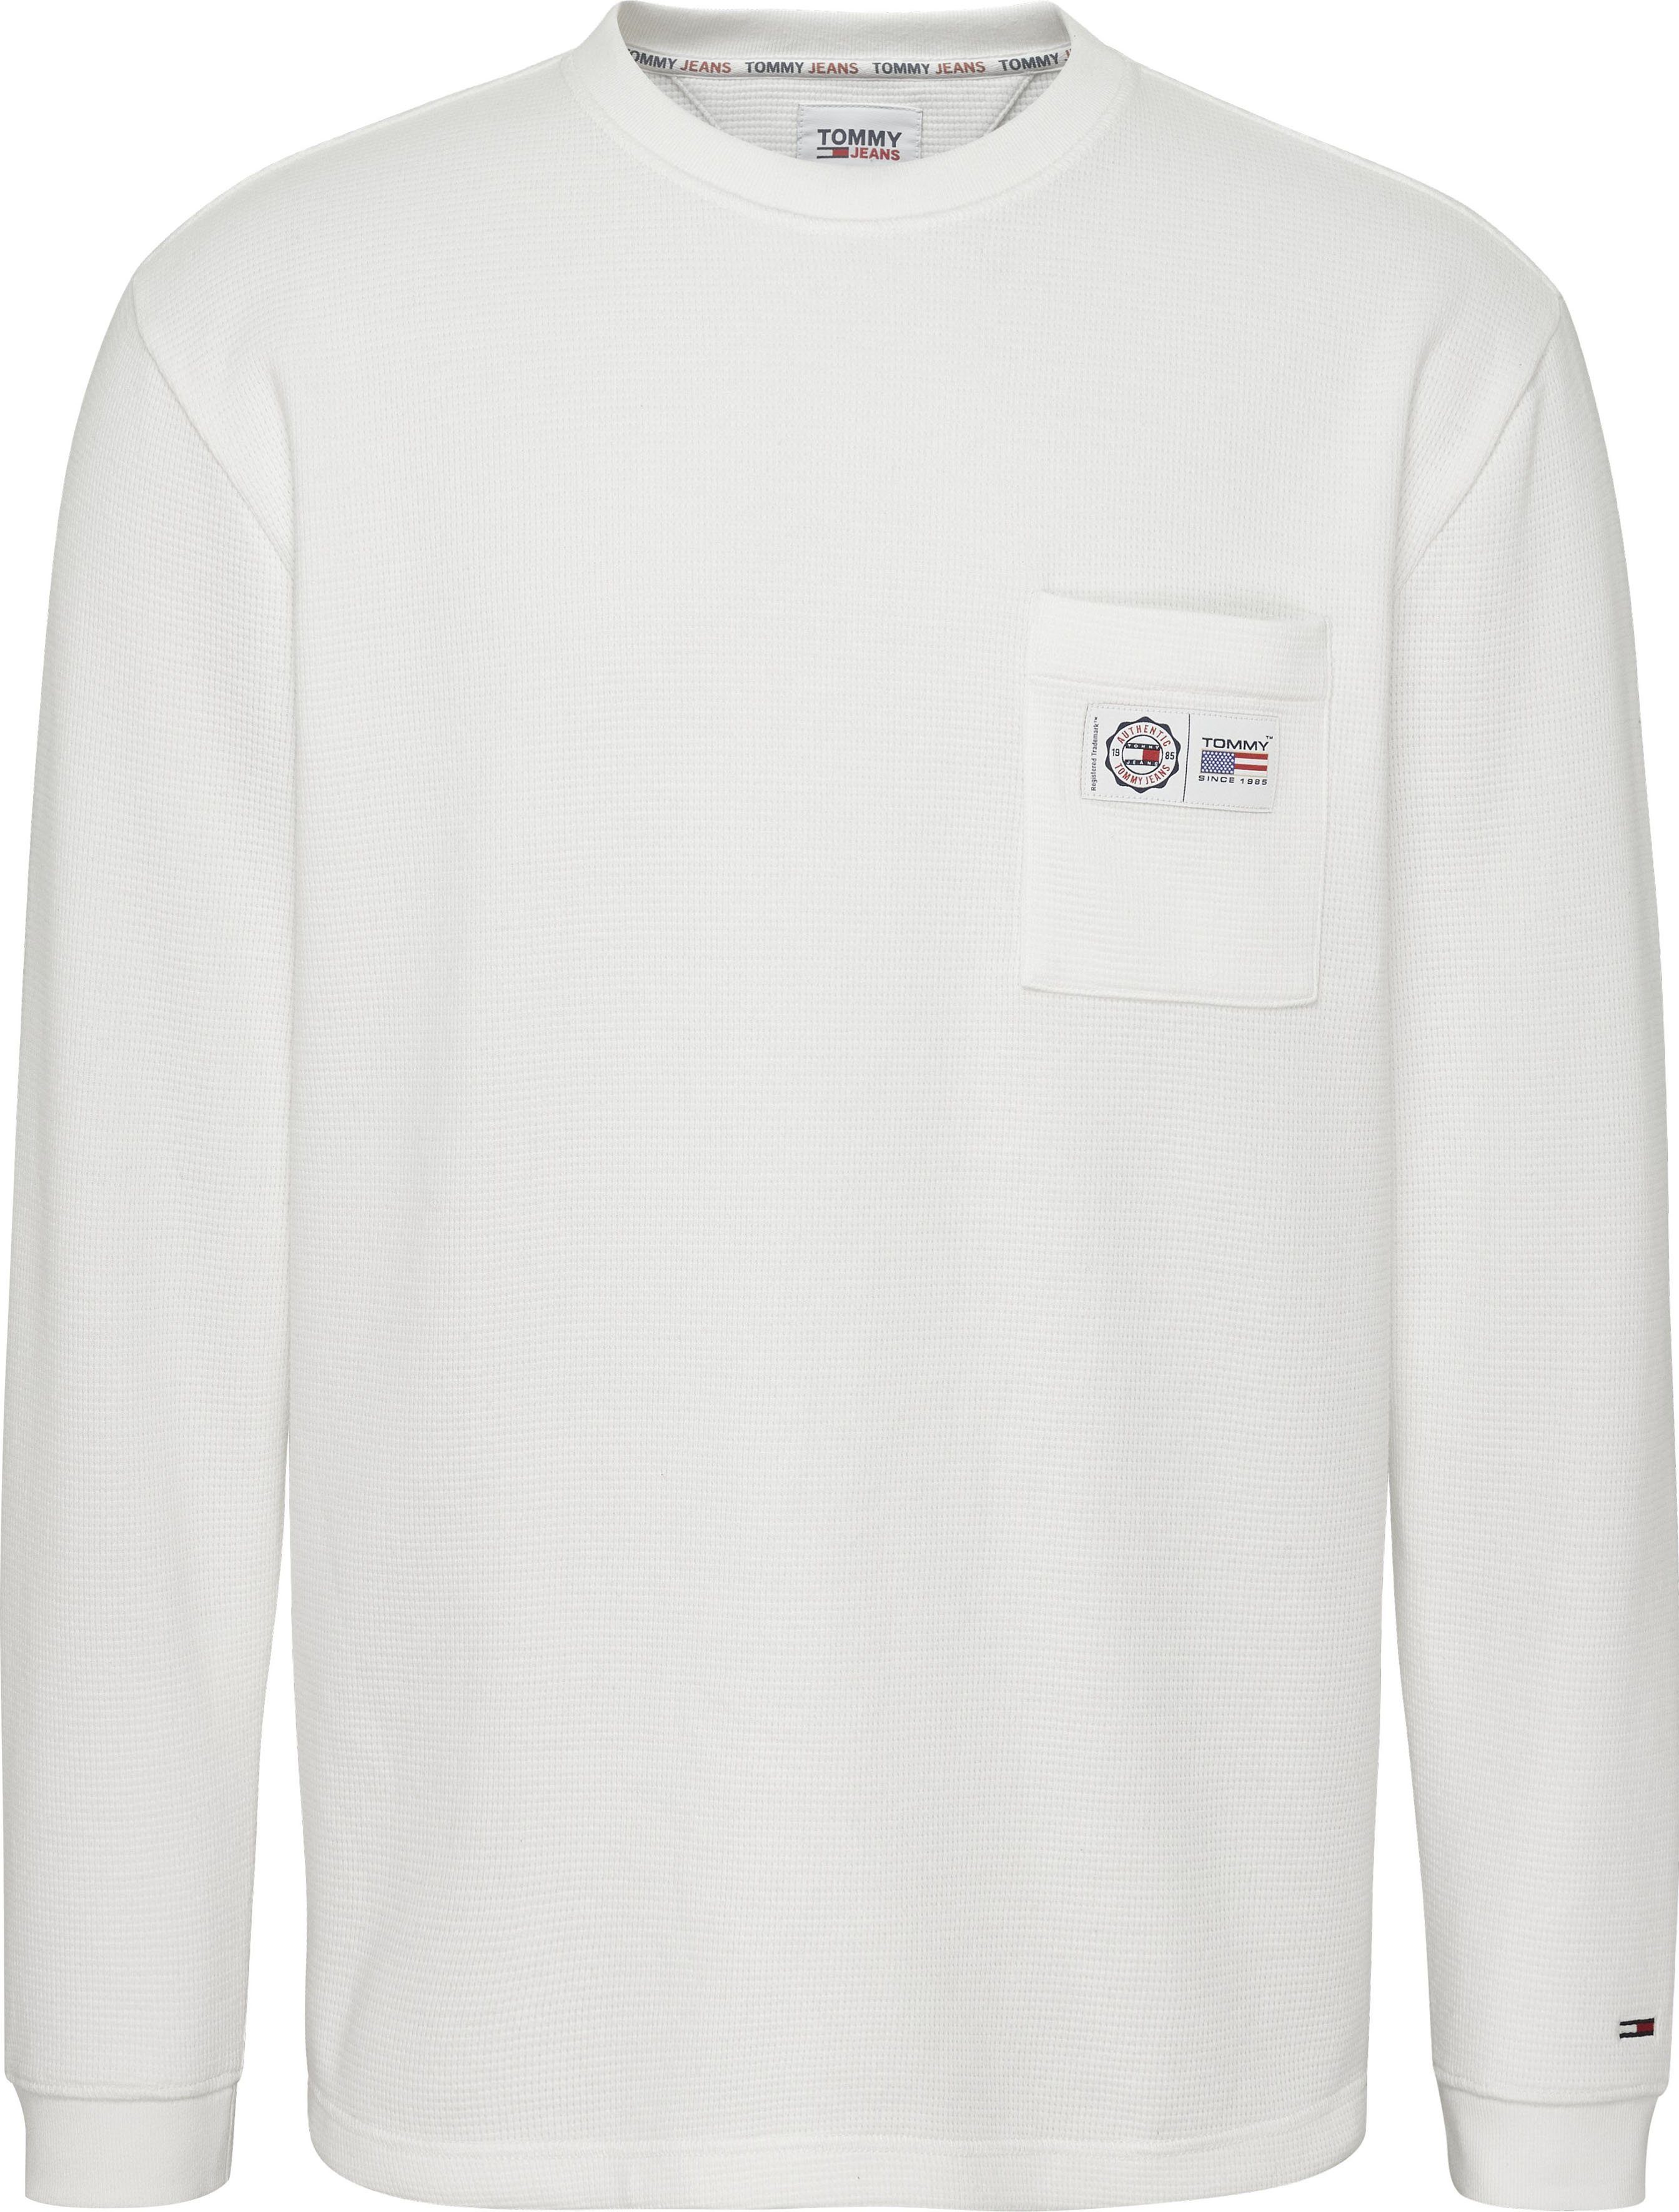 SOFT Jeans SNIT White Langarmshirt mit TJM LS Markenlabel CLSC Tommy